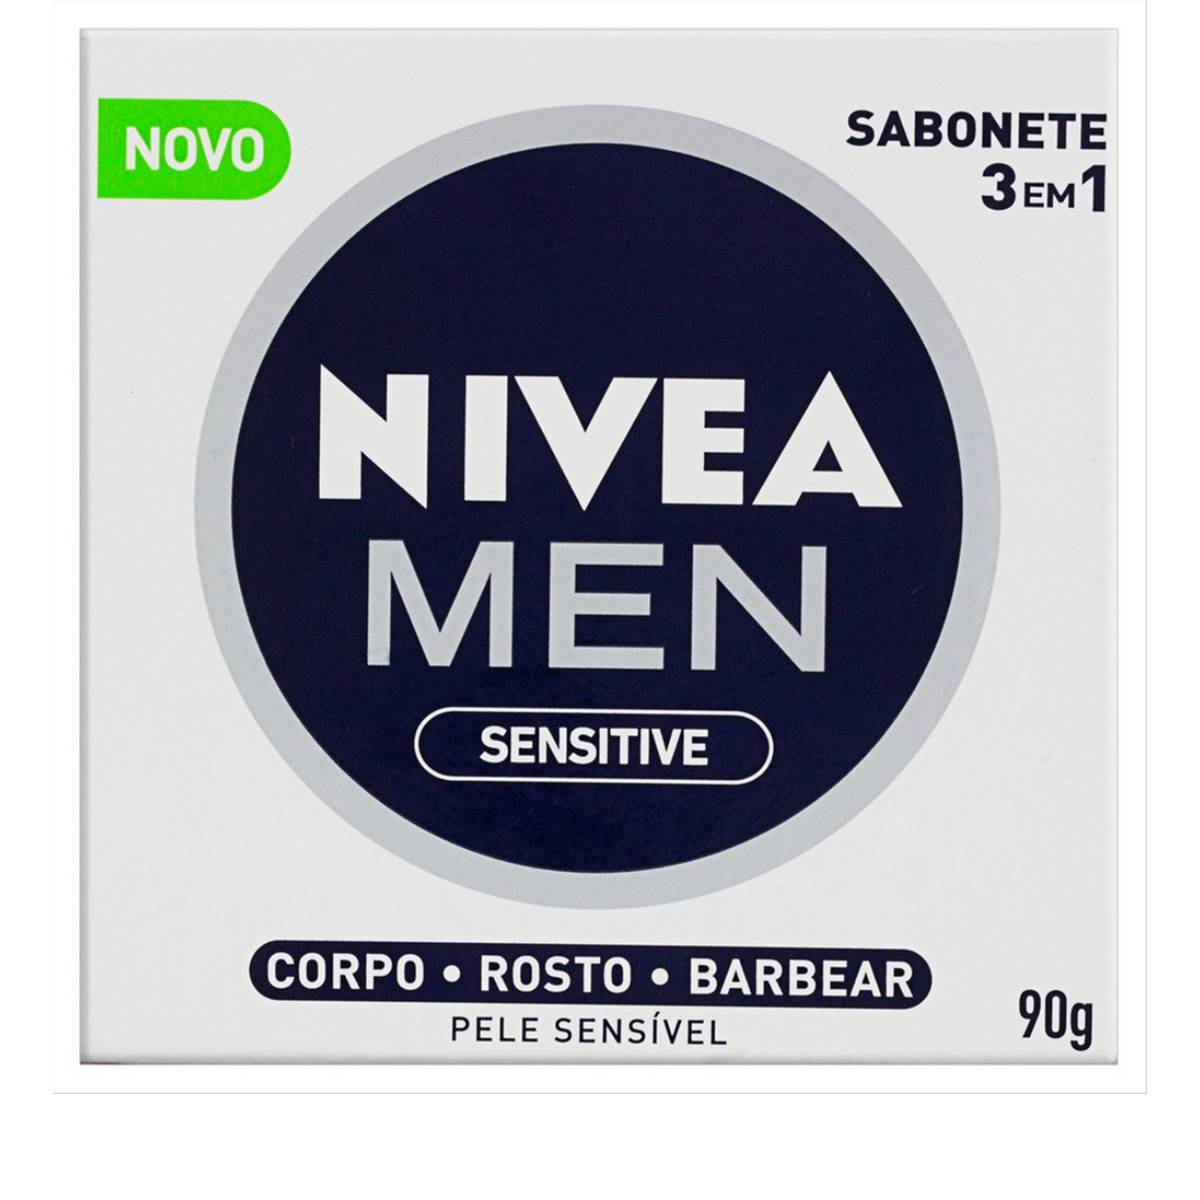 Sabonete em Barra Nivea Men 3 em 1 Sensitive 90g